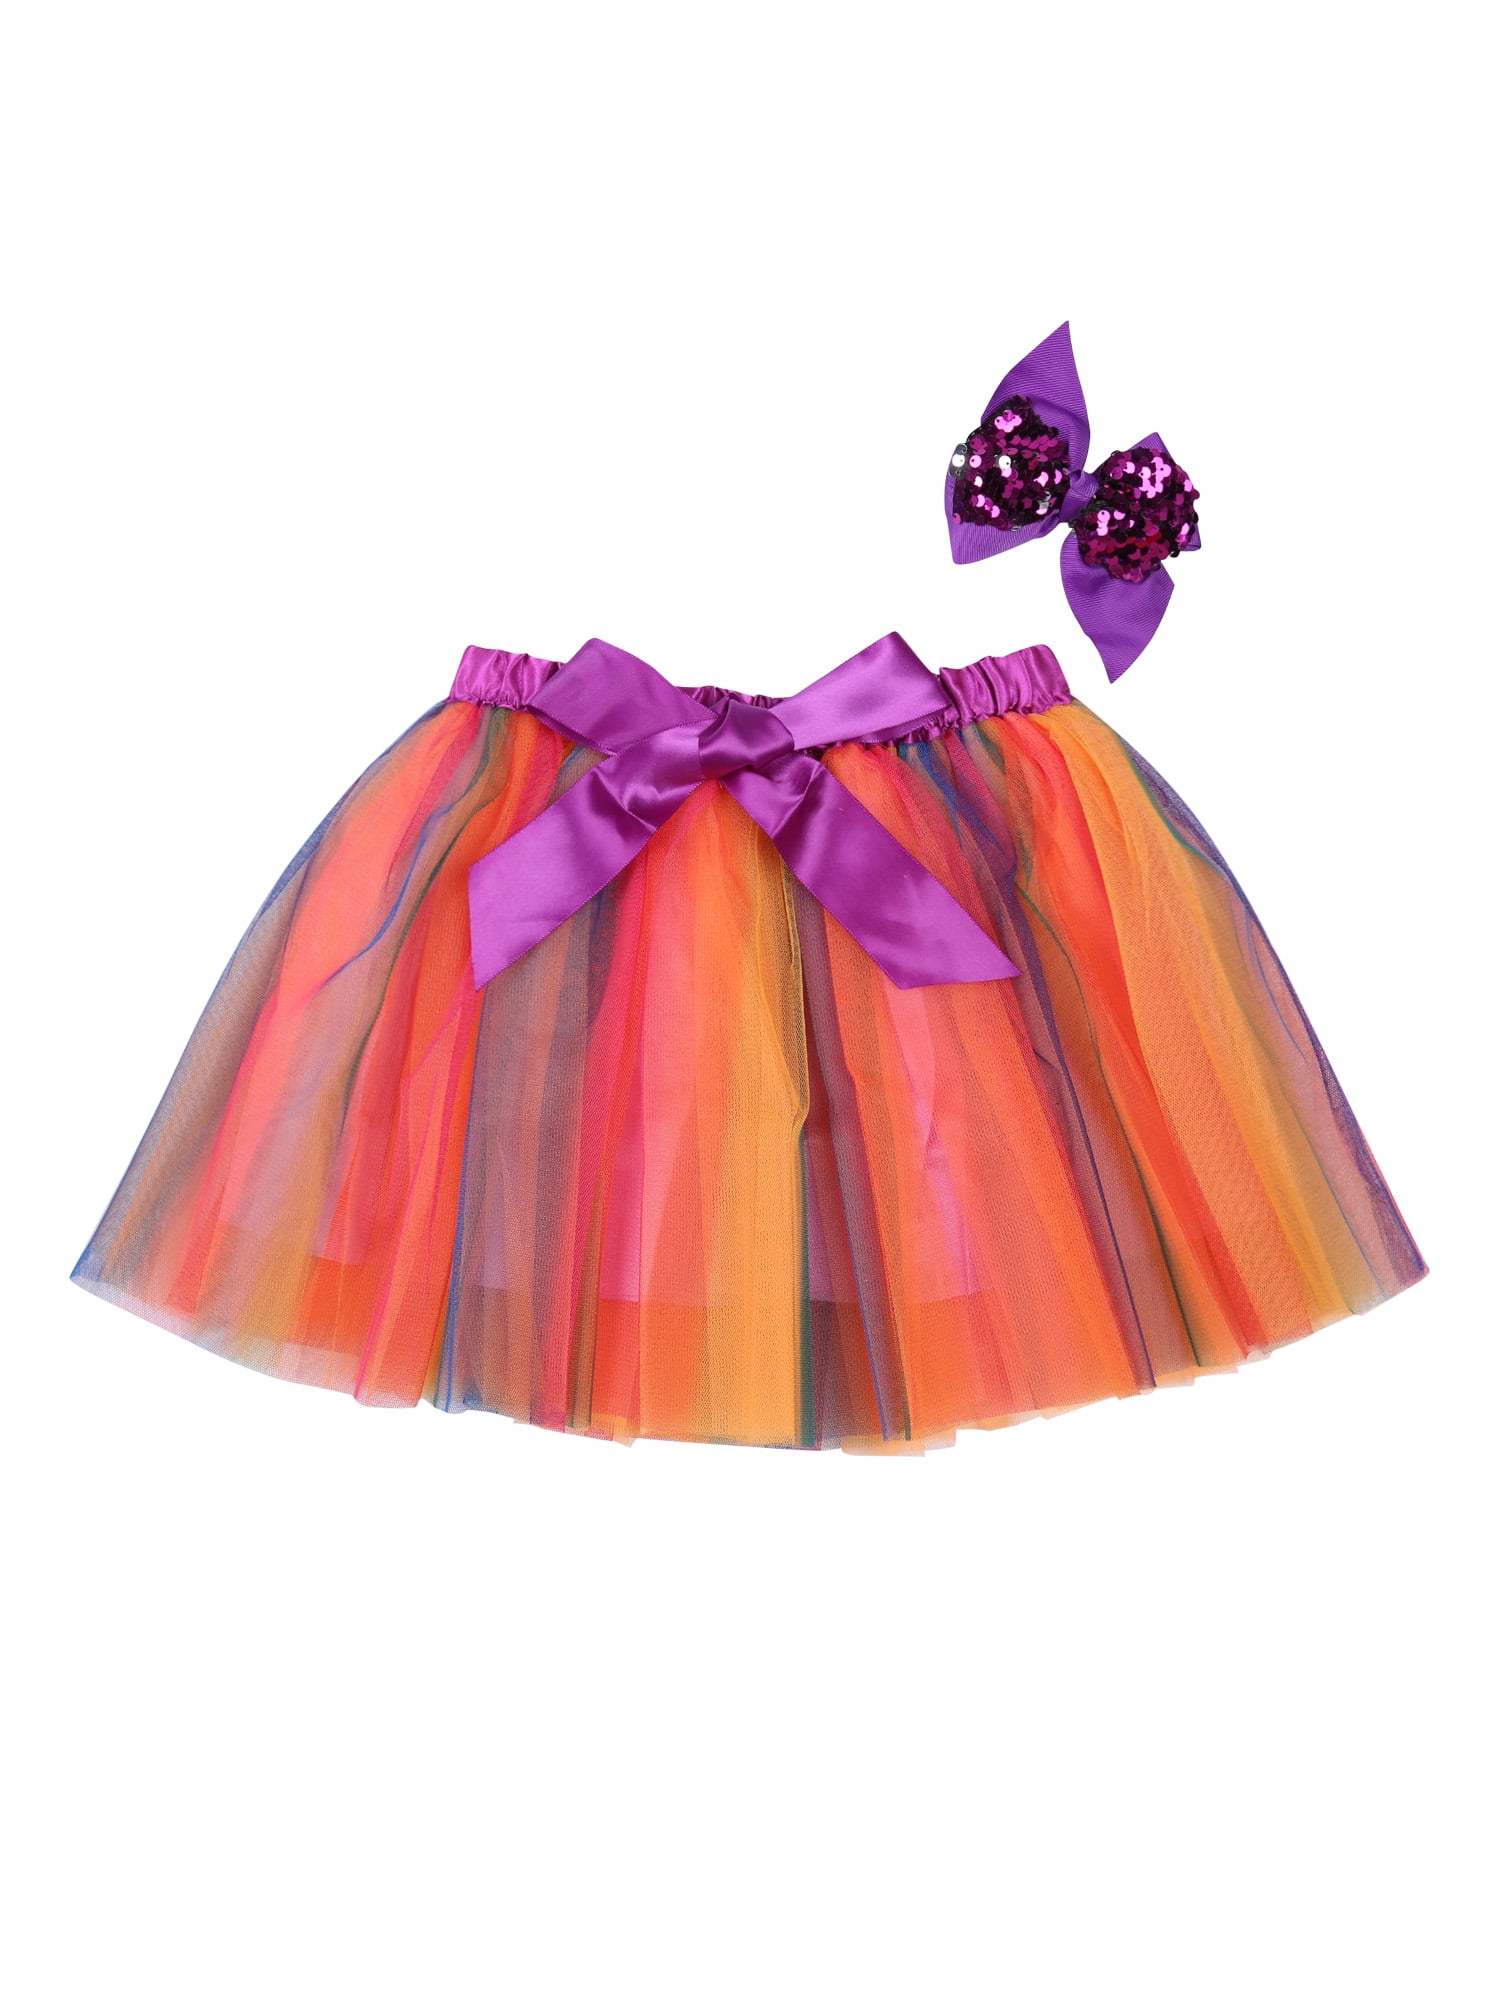 Fashion Kids Girls Tutu Tulle Party Dance Ballet Skirt Toddler Baby Rainbow Costume Skirt Xshuai for 2-11 Years Old Kids 